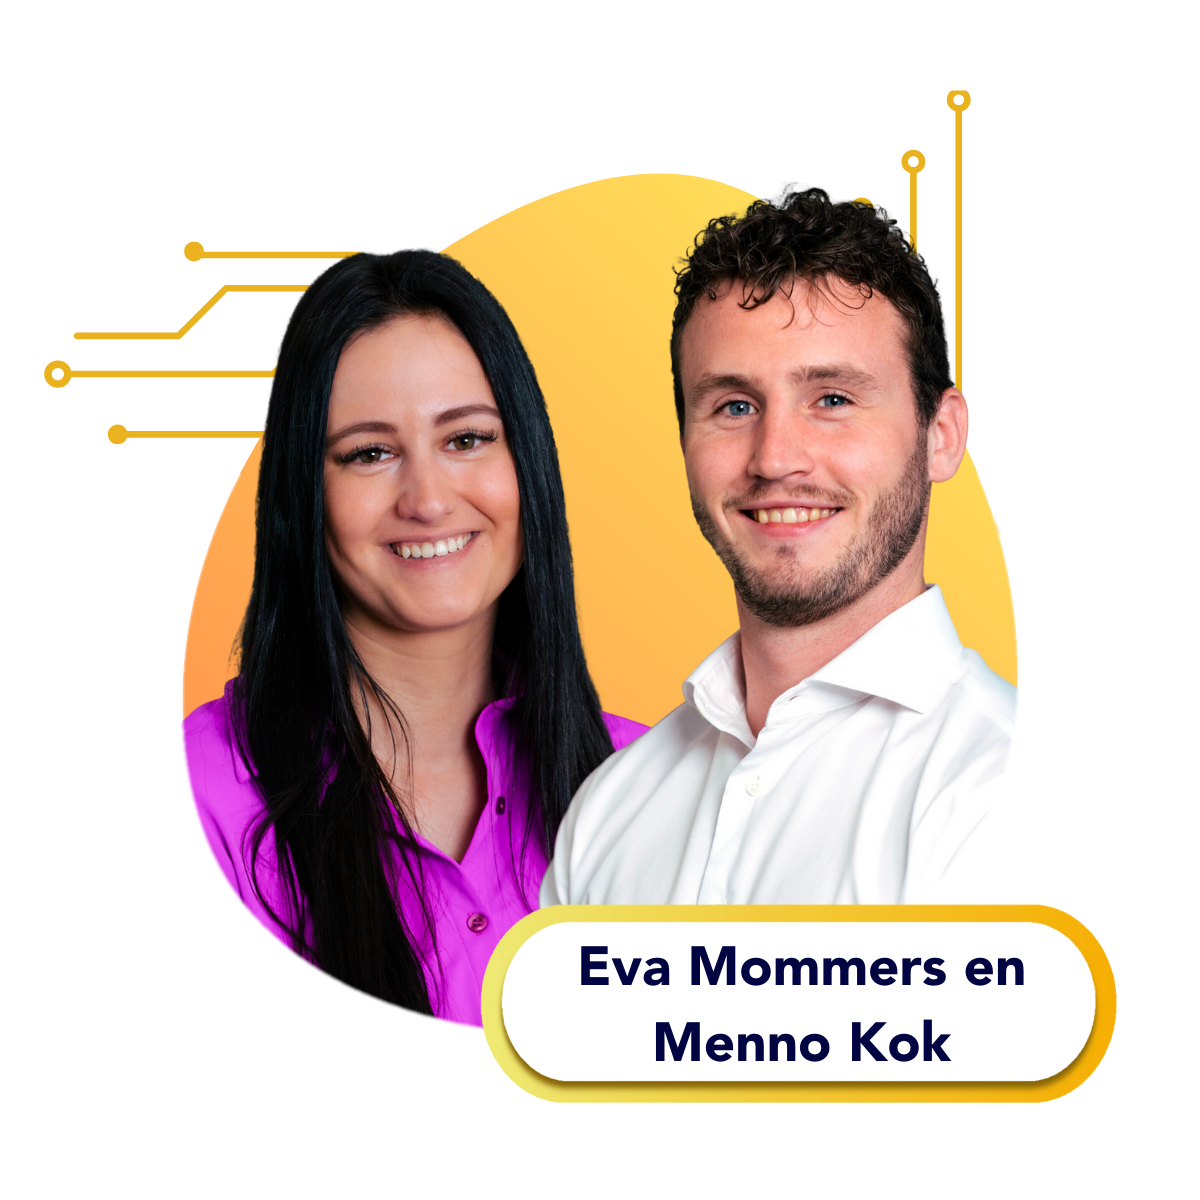 Eva Mommers en Menno Kok